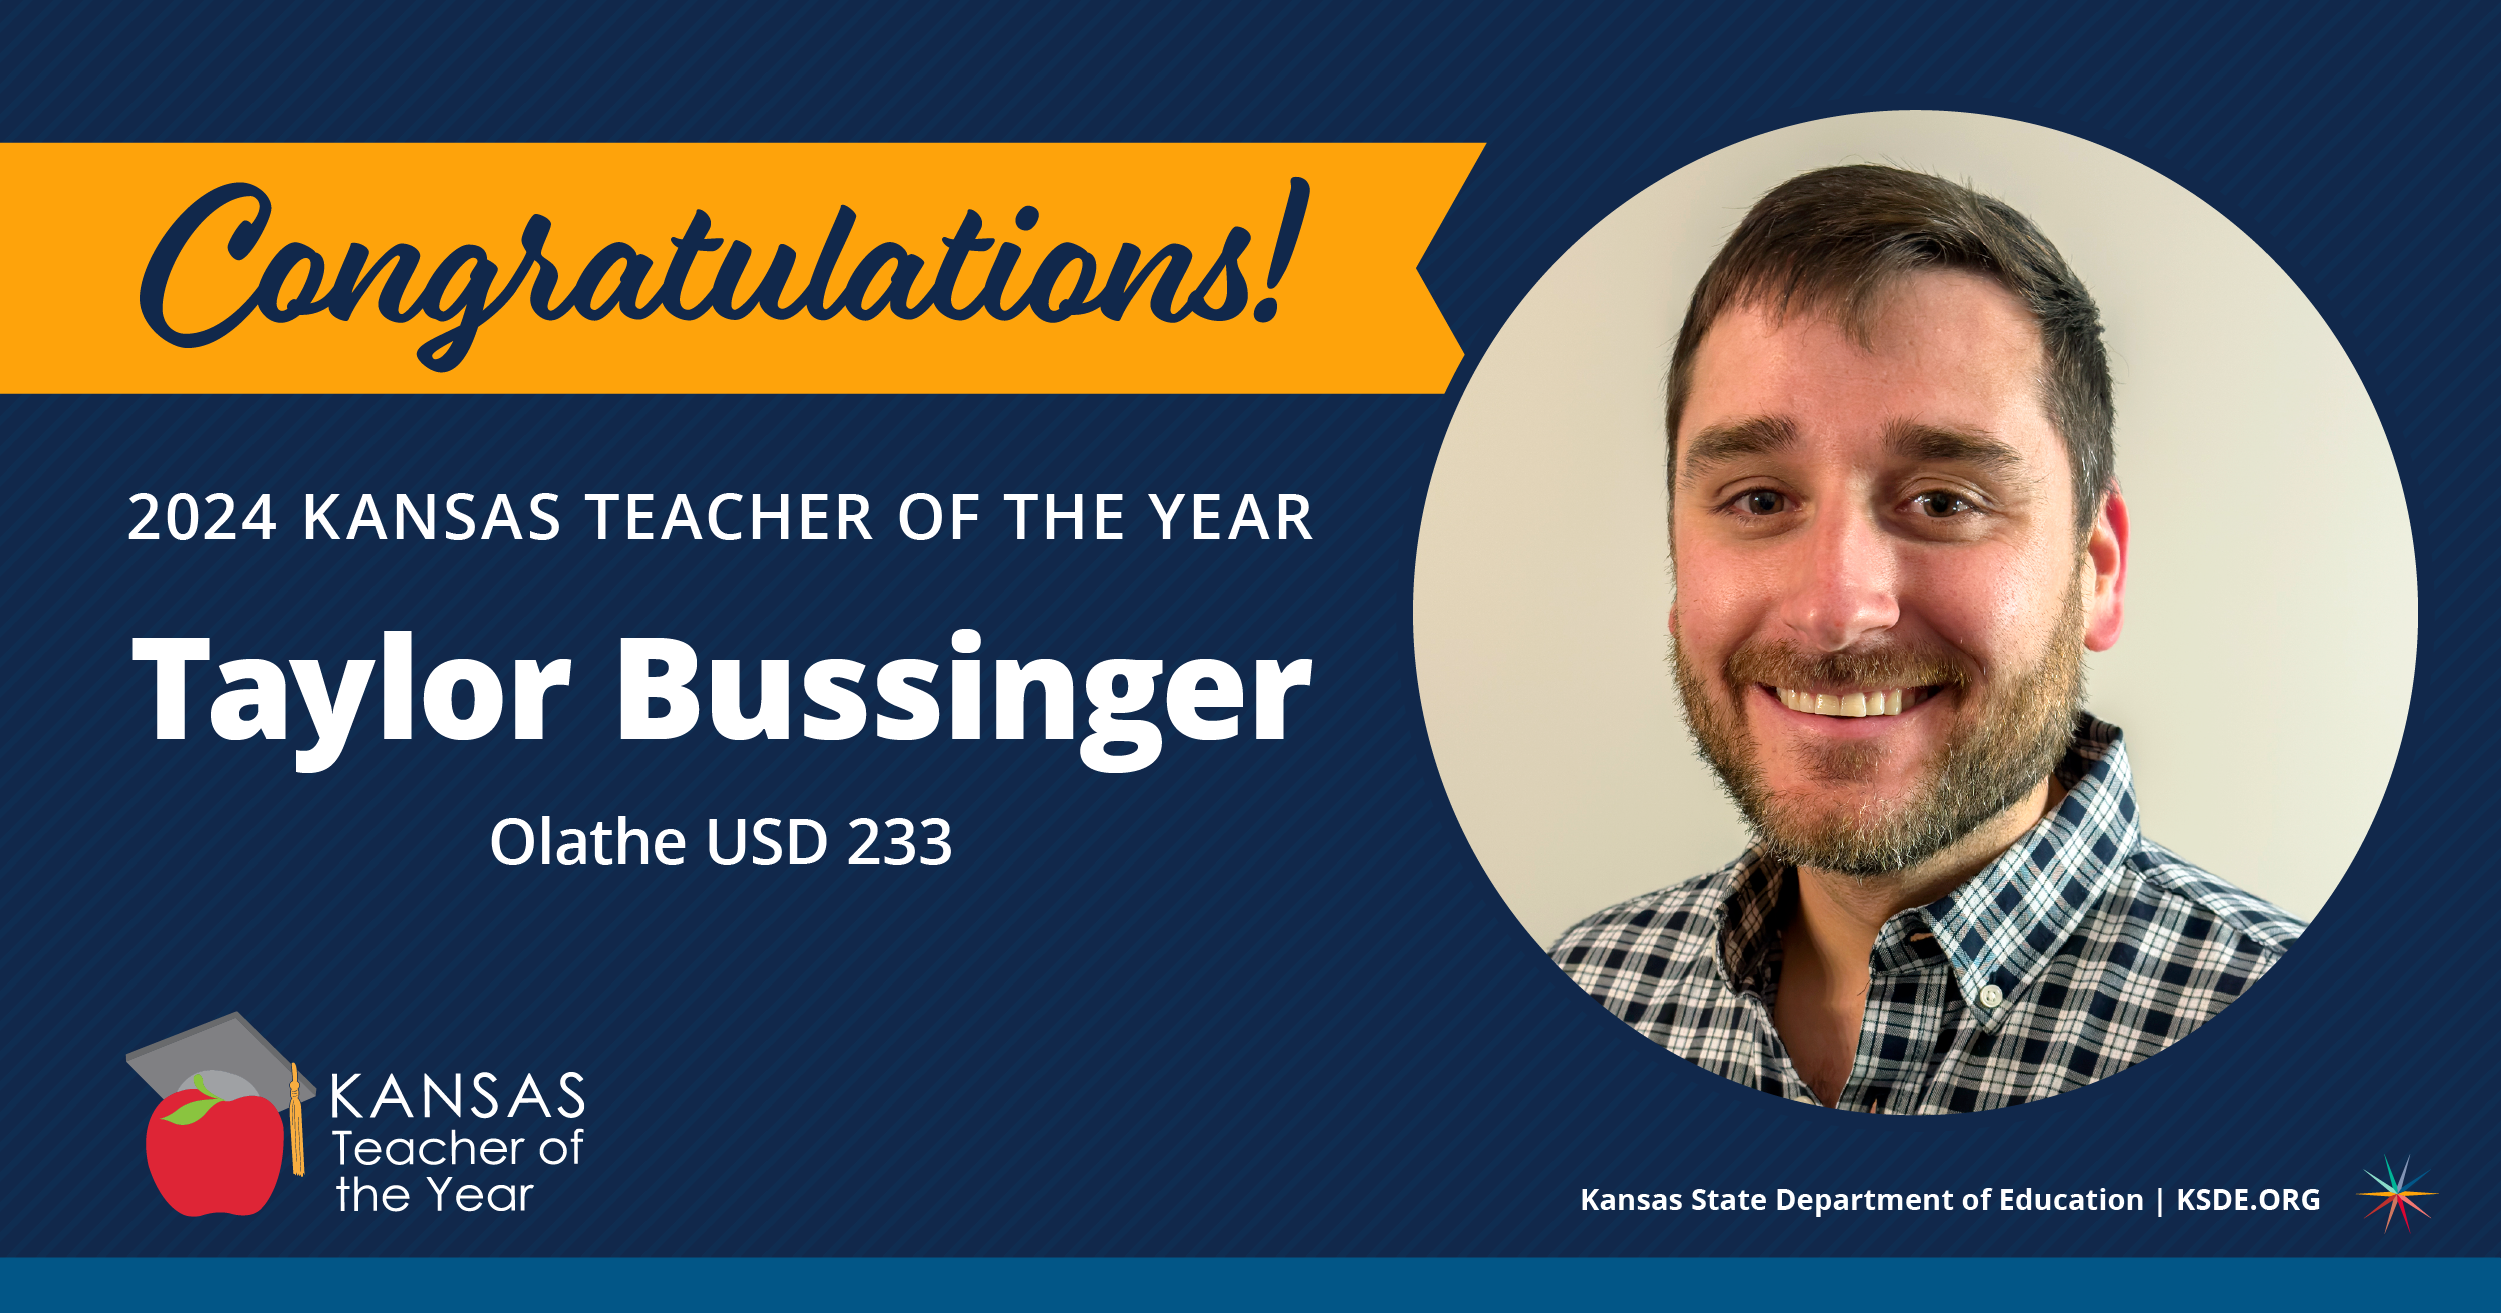 Congratulations 2024 Kansas Teacher of the Year Taylor Bussinger